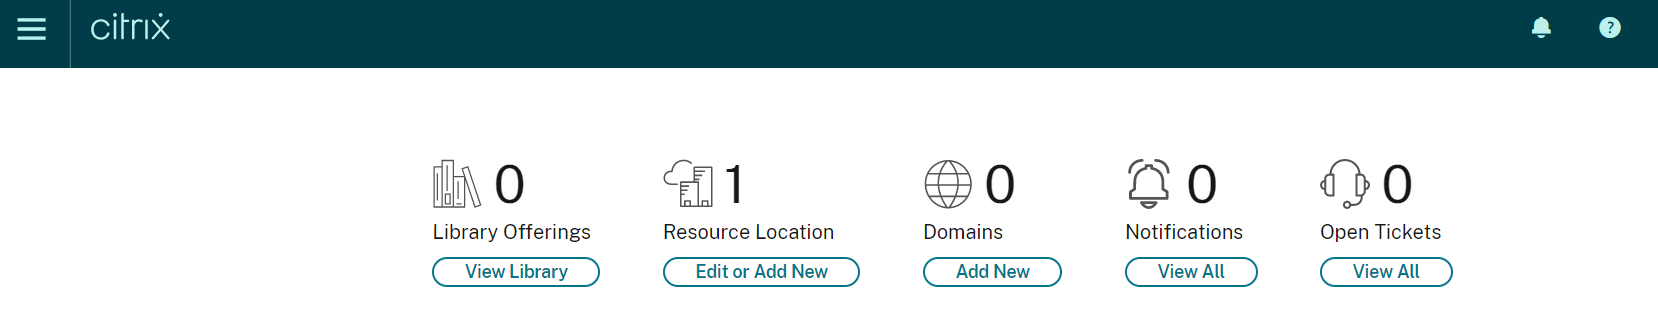 Citrix Virtual Desktops service - New Resource Location